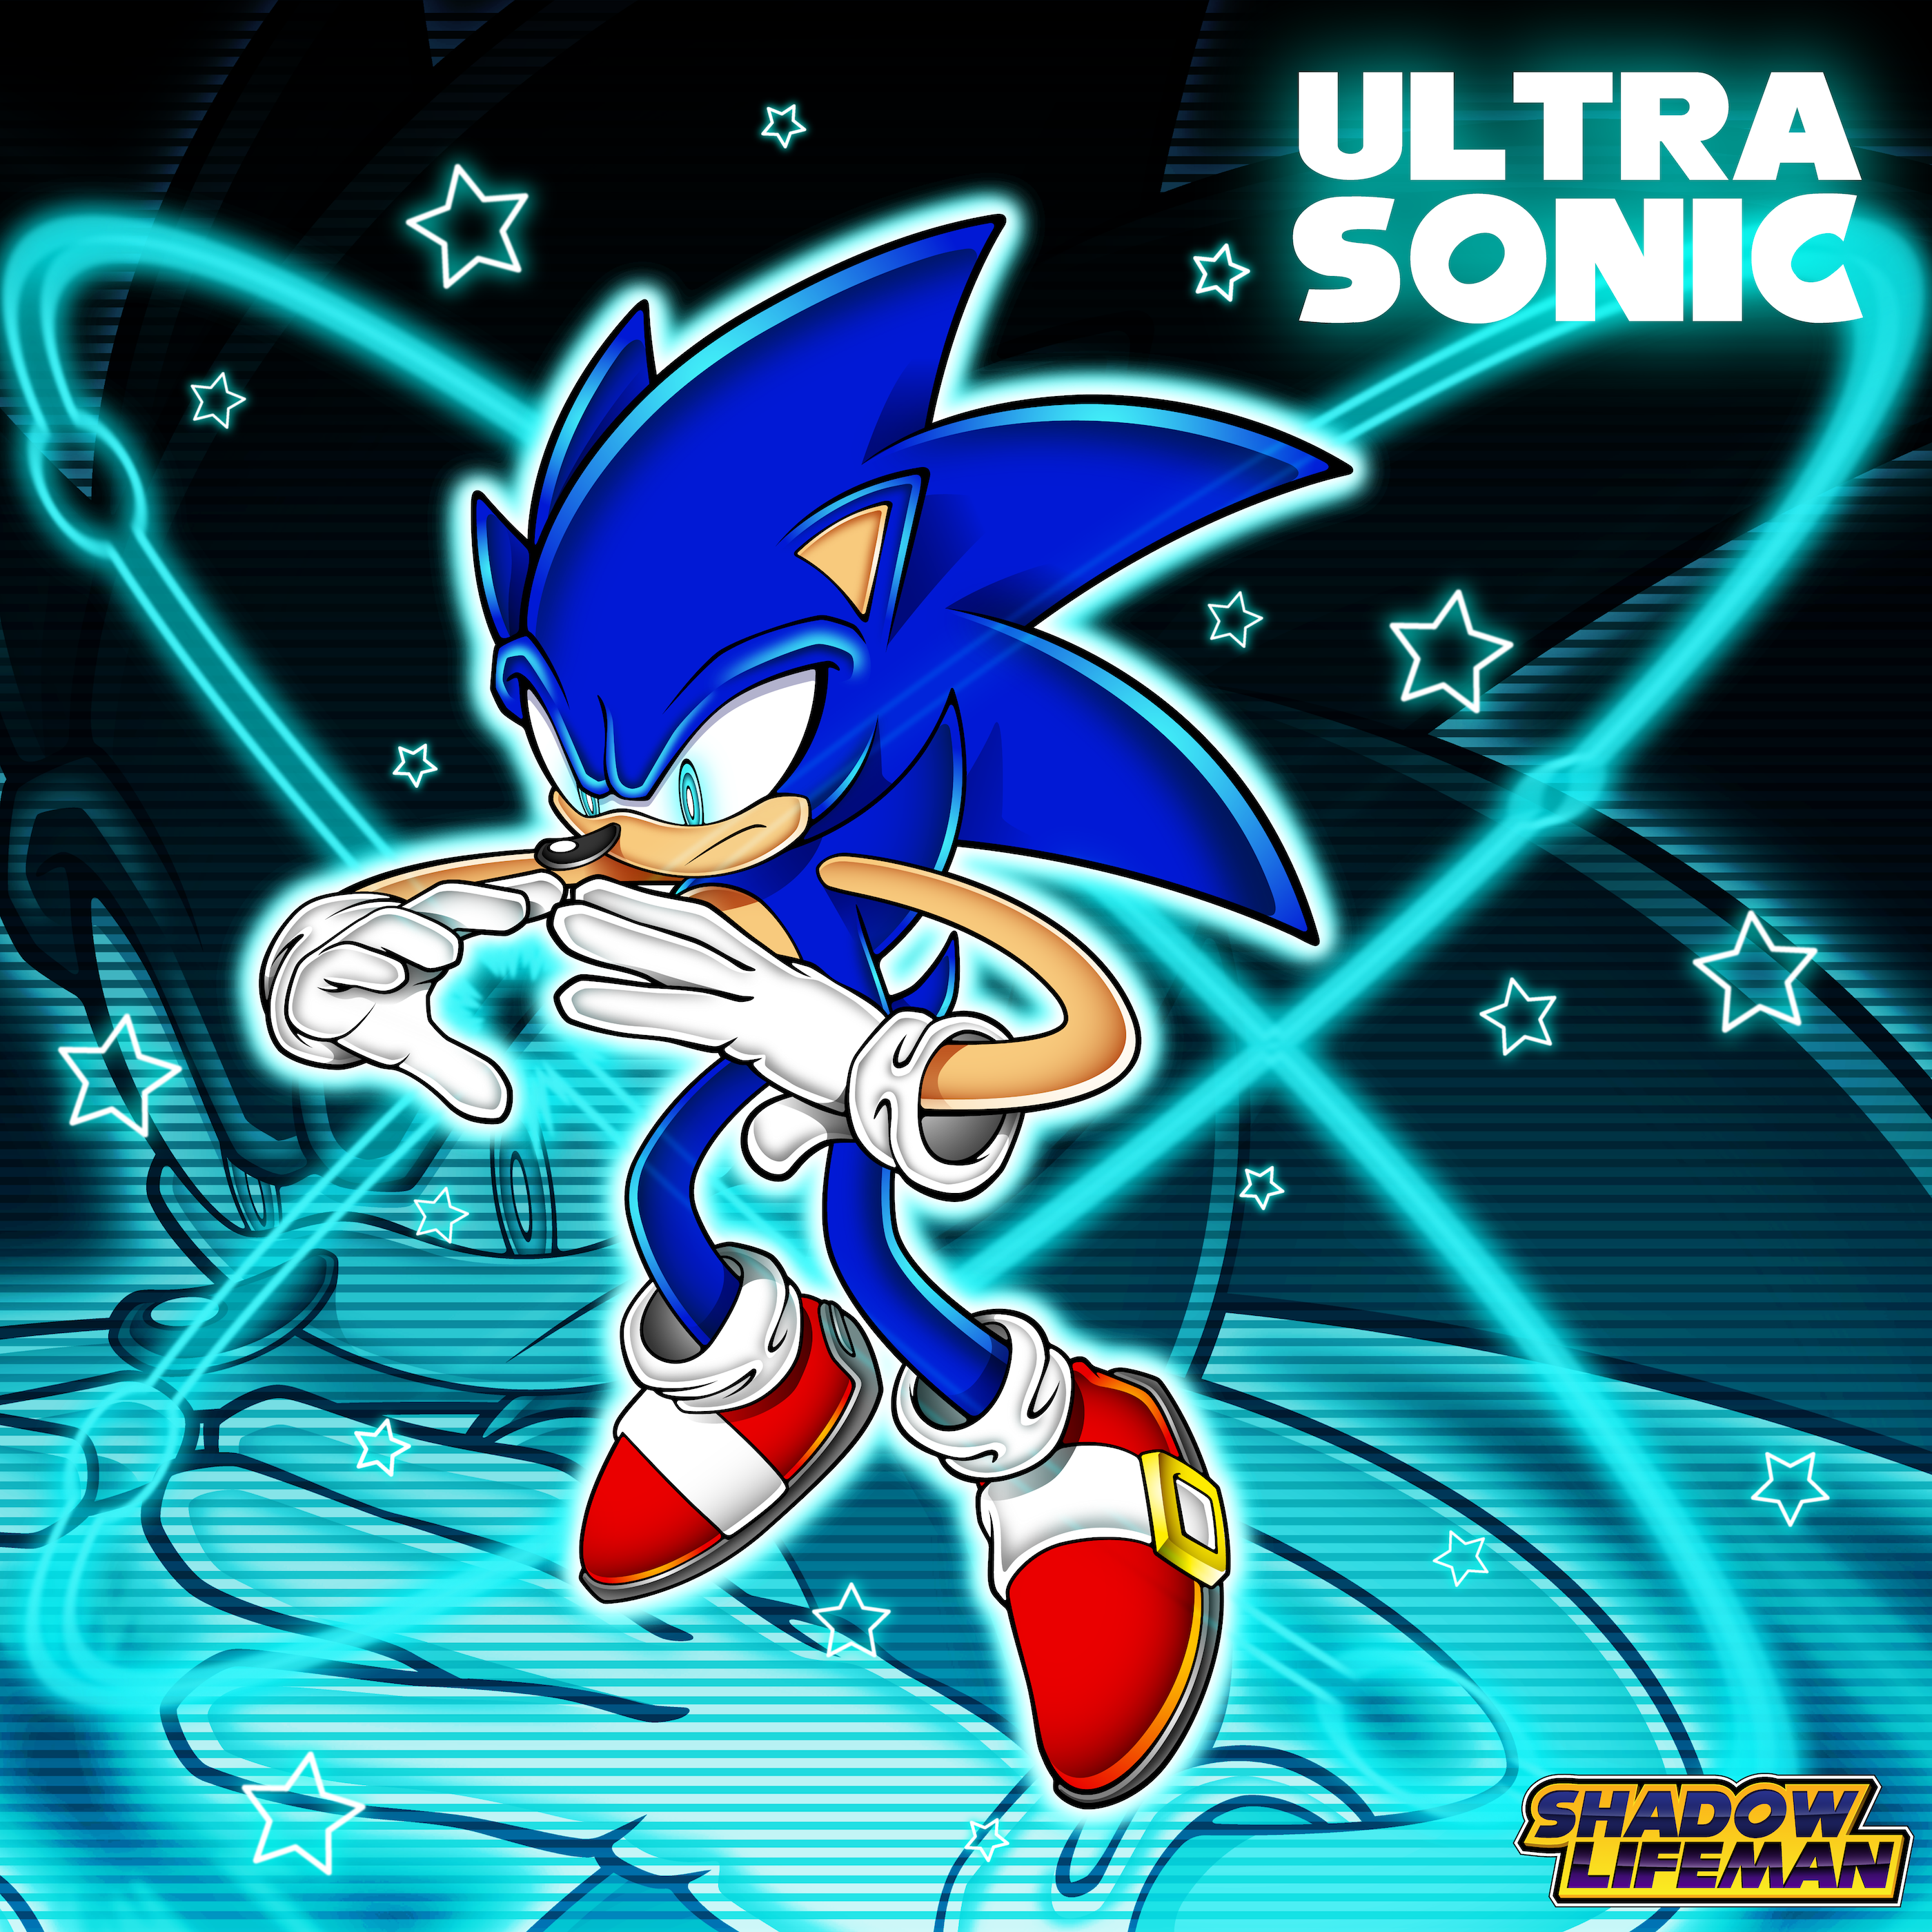 Super Sonic 2 - Sonic Frontiers by ShadowLifeman on DeviantArt